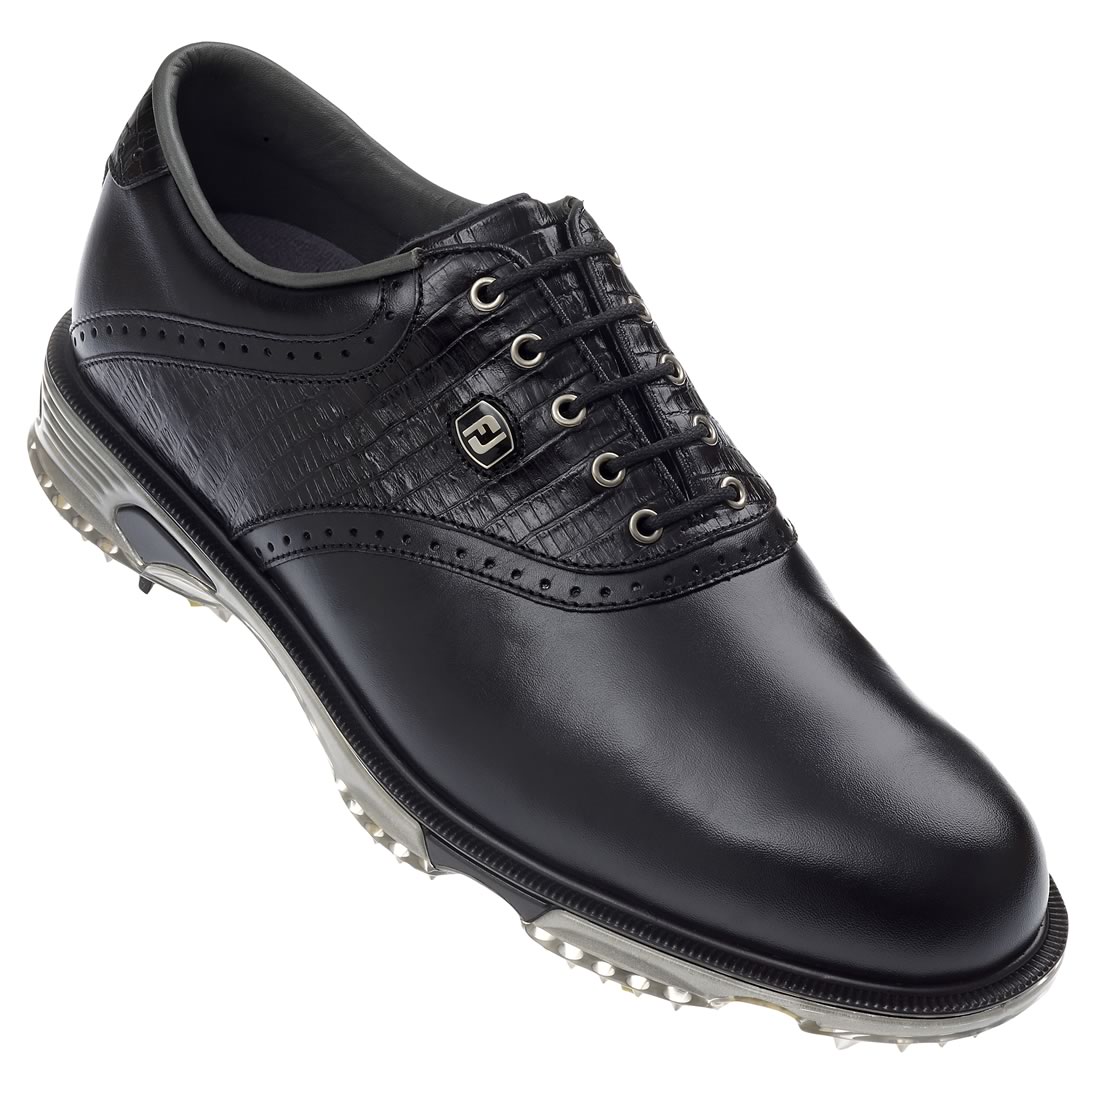 Dryjoys Tour Golf Shoes Black #53676